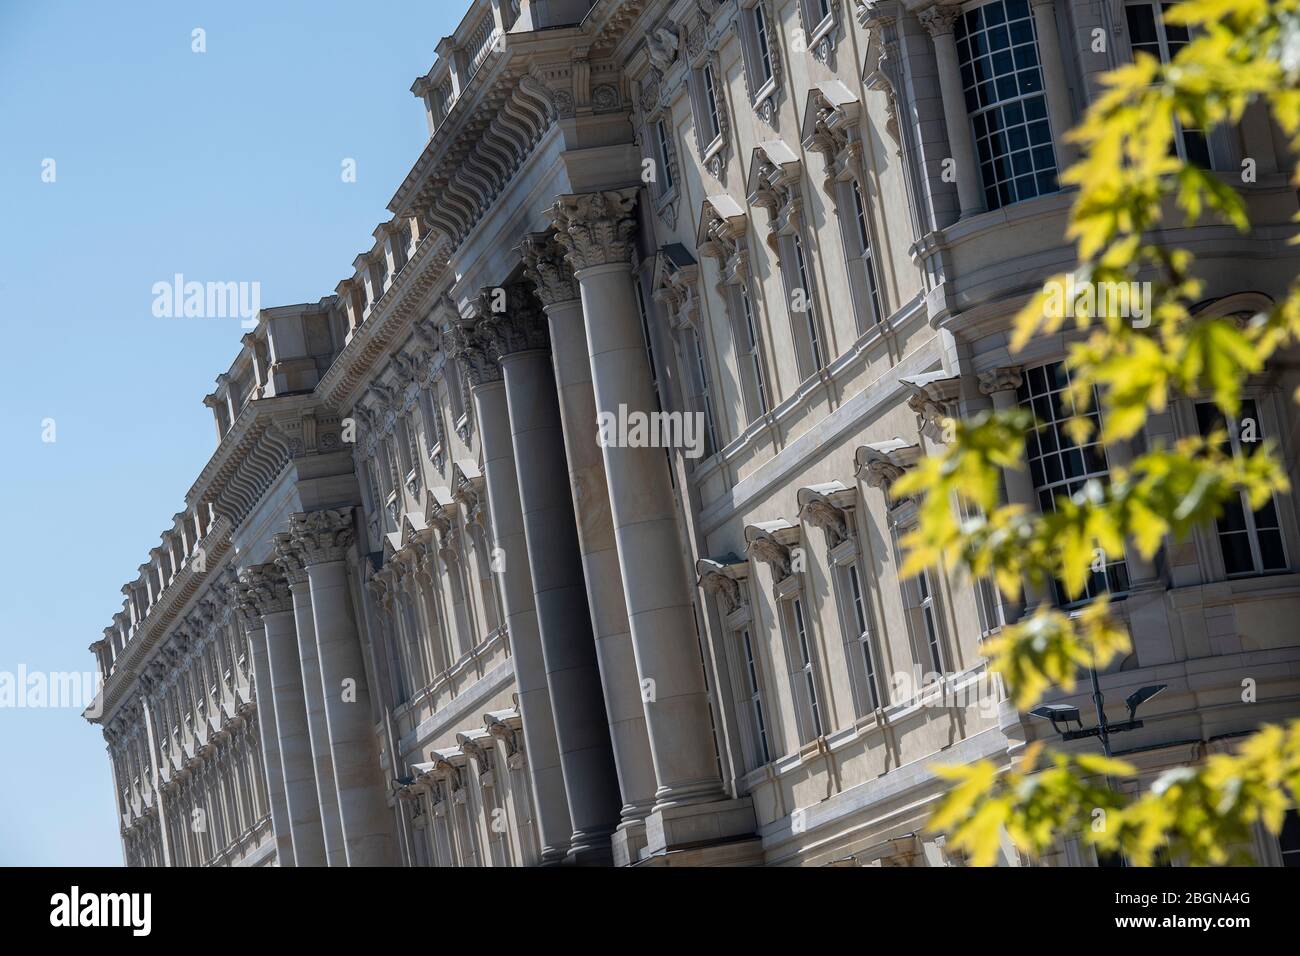 Berlin, Deutschland. April 2020. Die façade des Stadtpalastes, das Humboldt Forum Quelle: Paul Zinken/dpa-Zentralbild/ZB/dpa/Alamy Live News Stockfoto